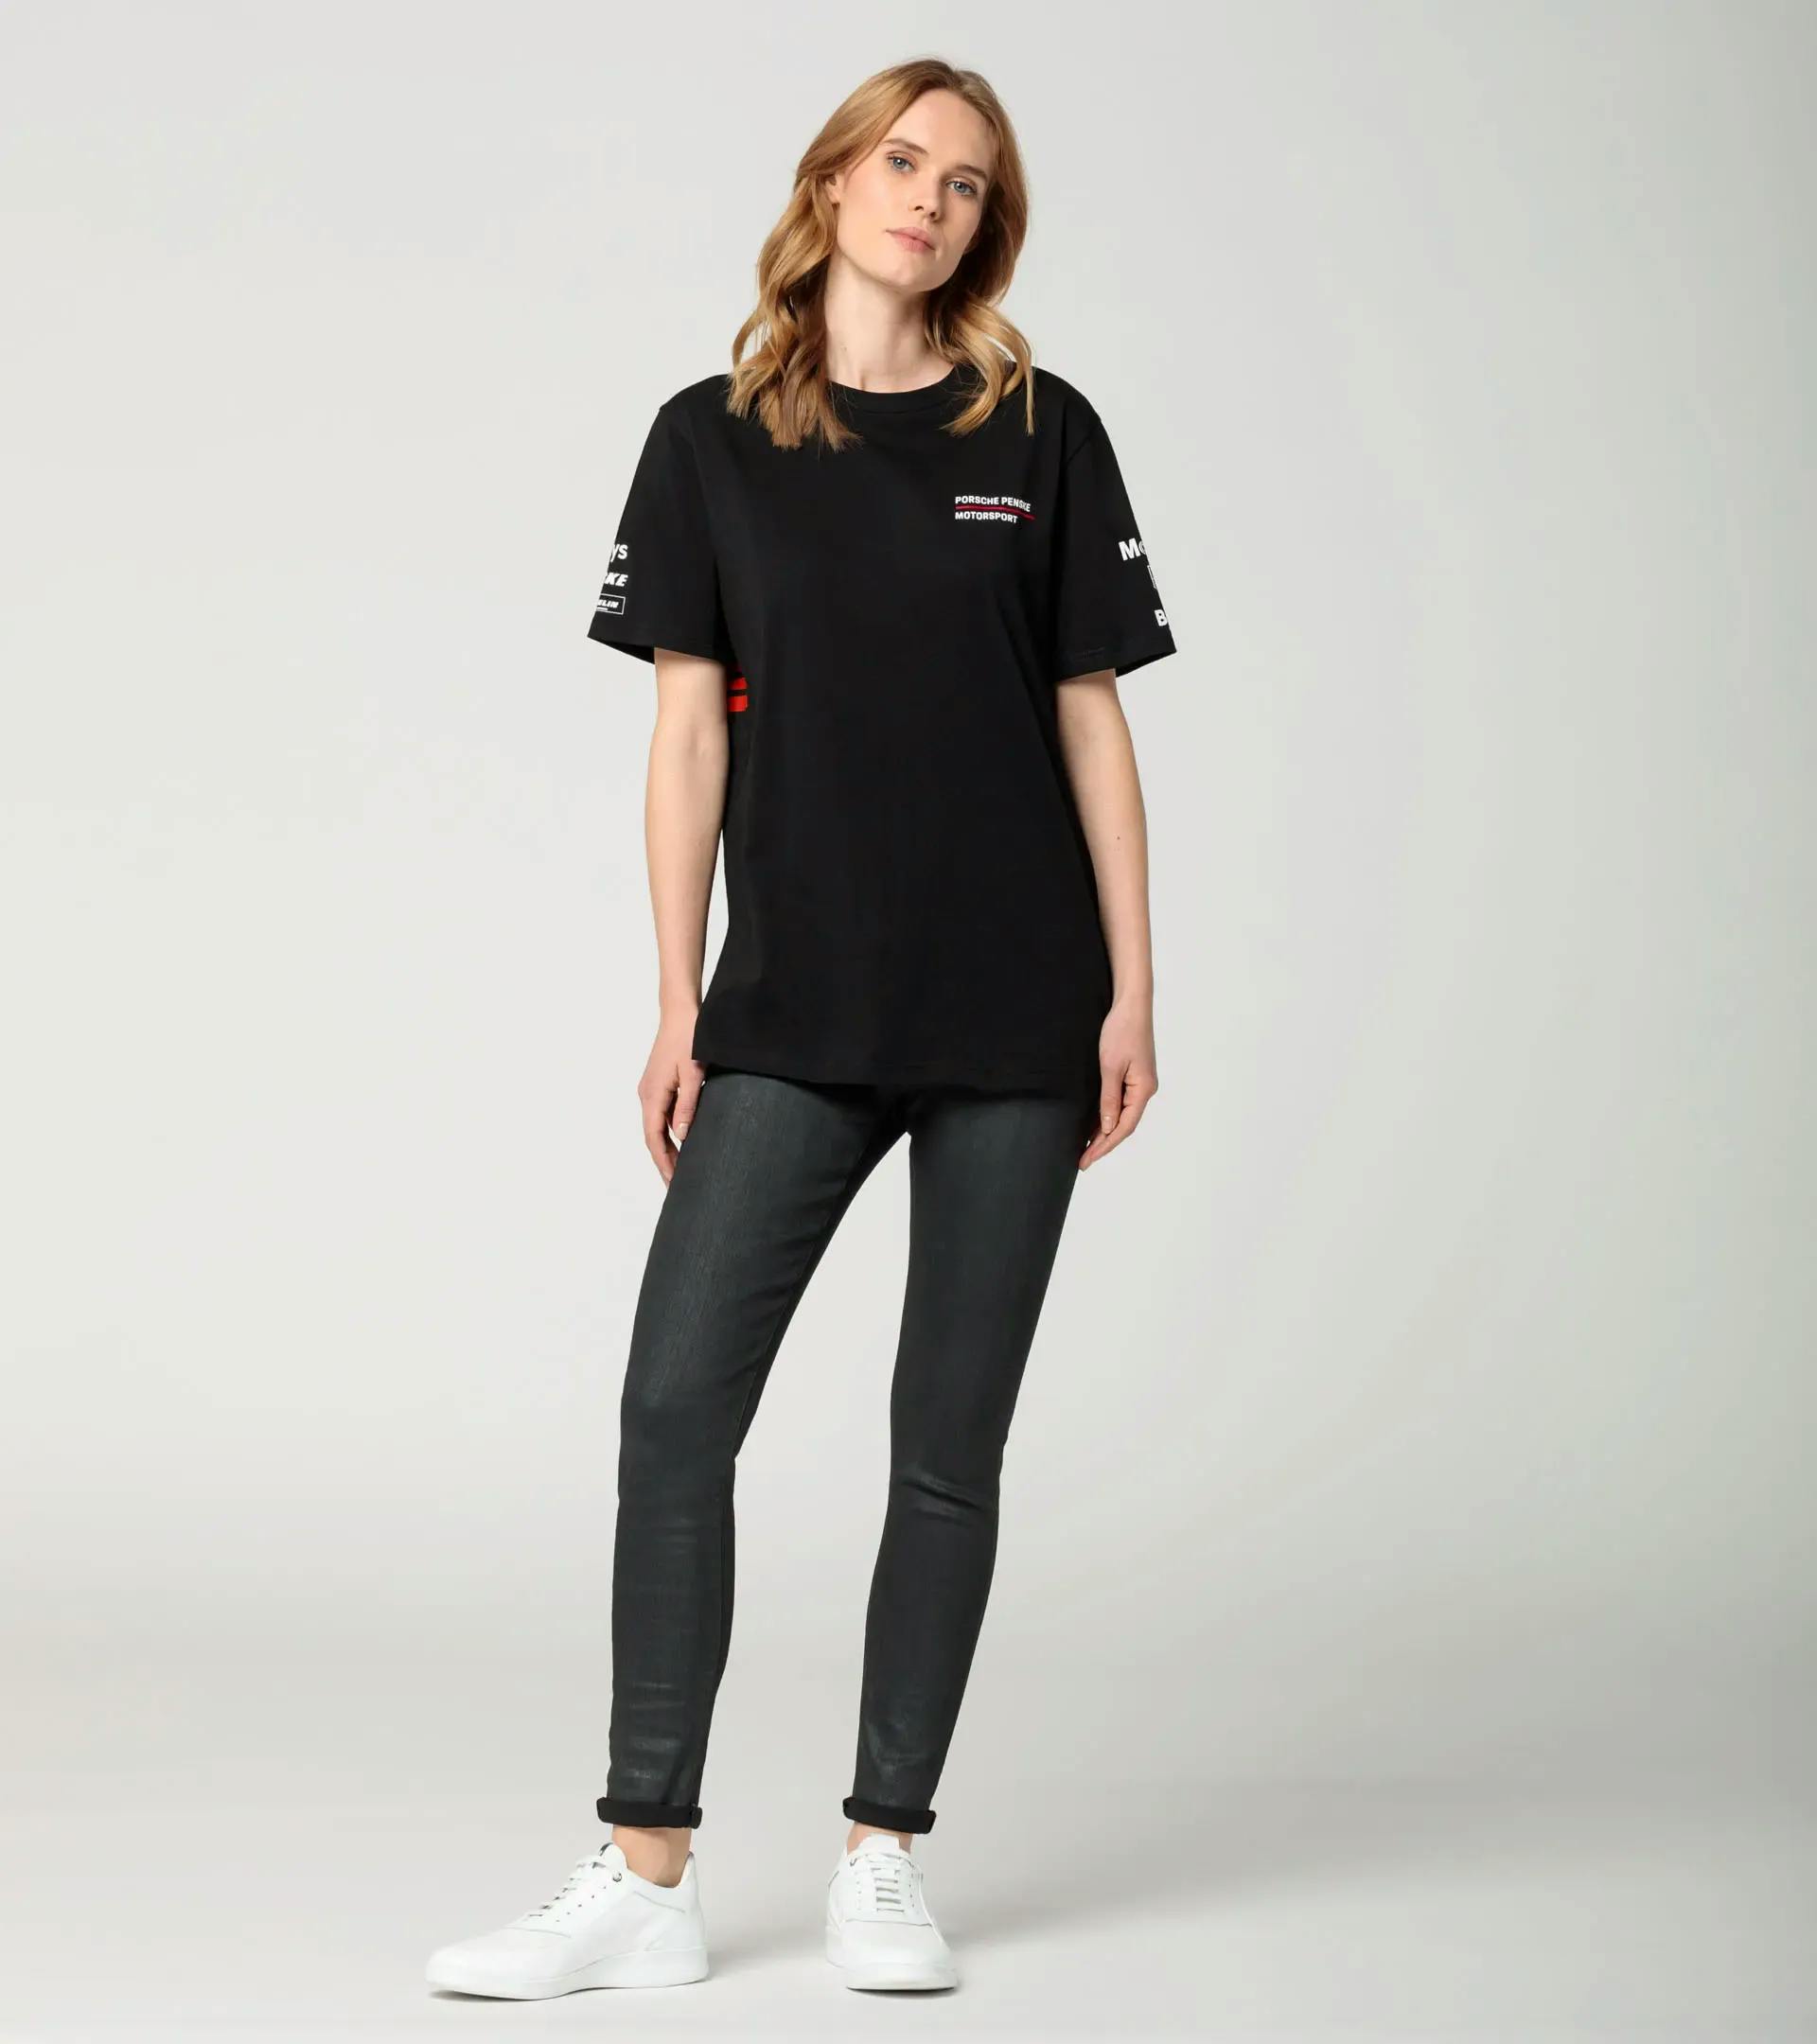 T-shirt unisexe – Porsche Penske Motorsport 7